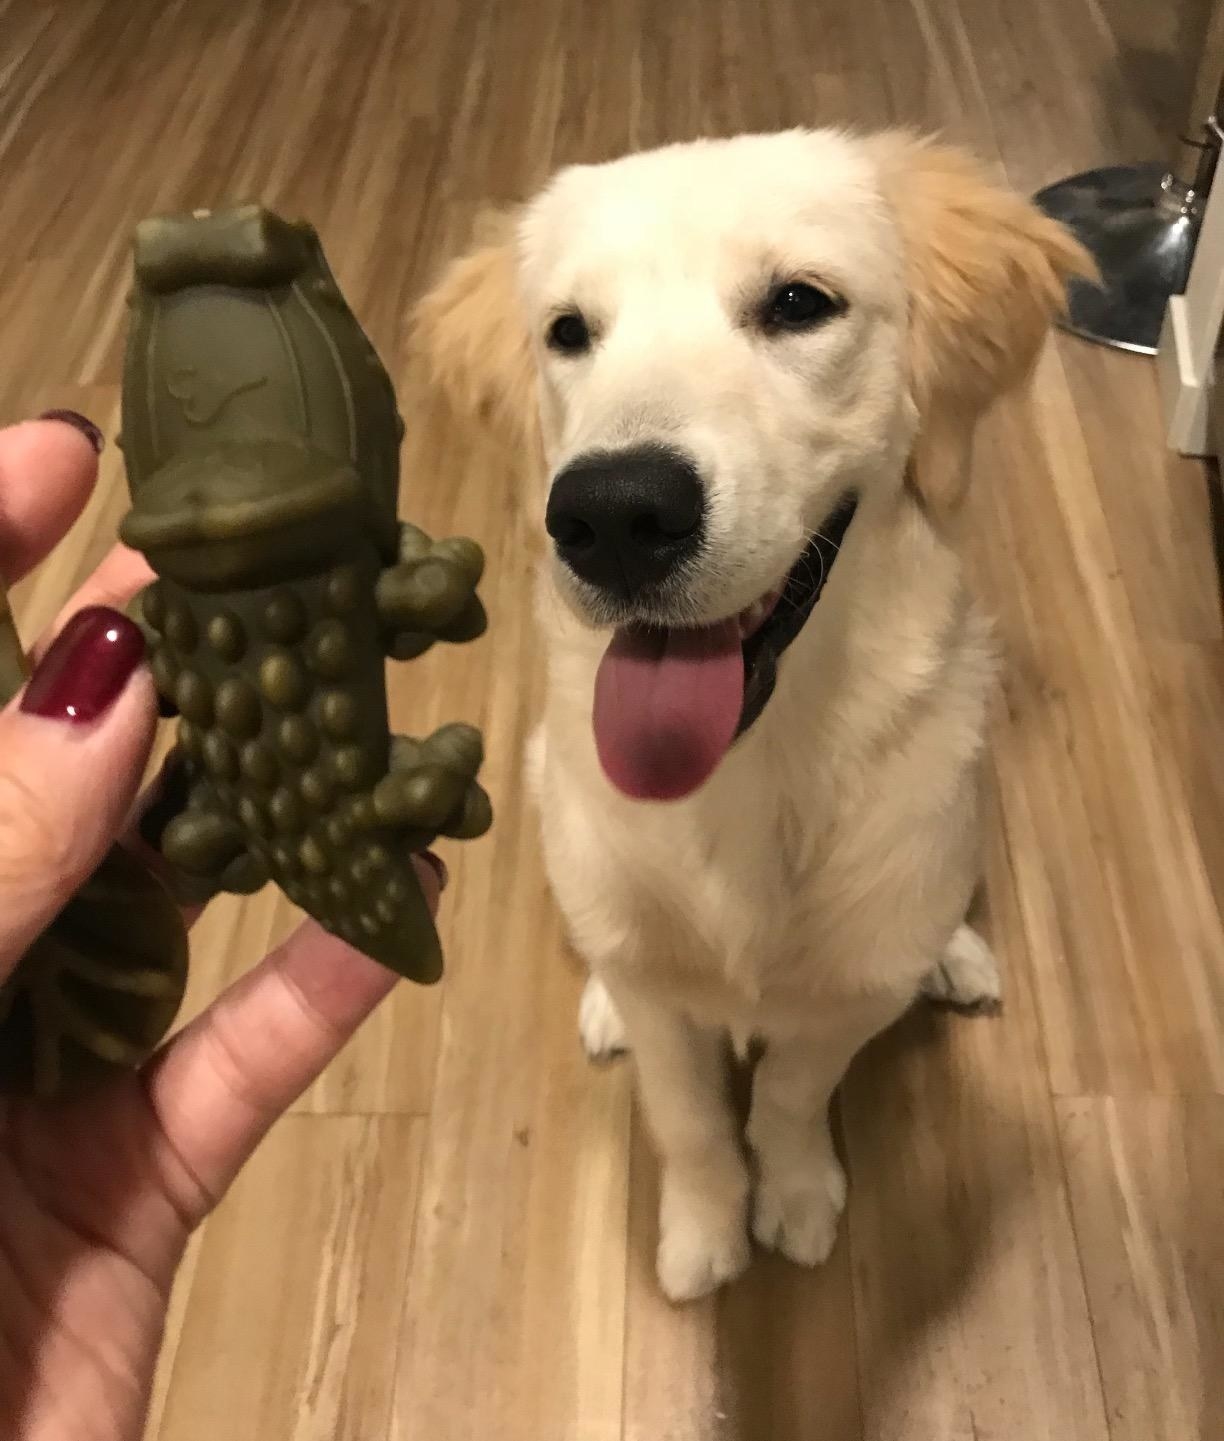 dog staring at an alligator-shaped treat